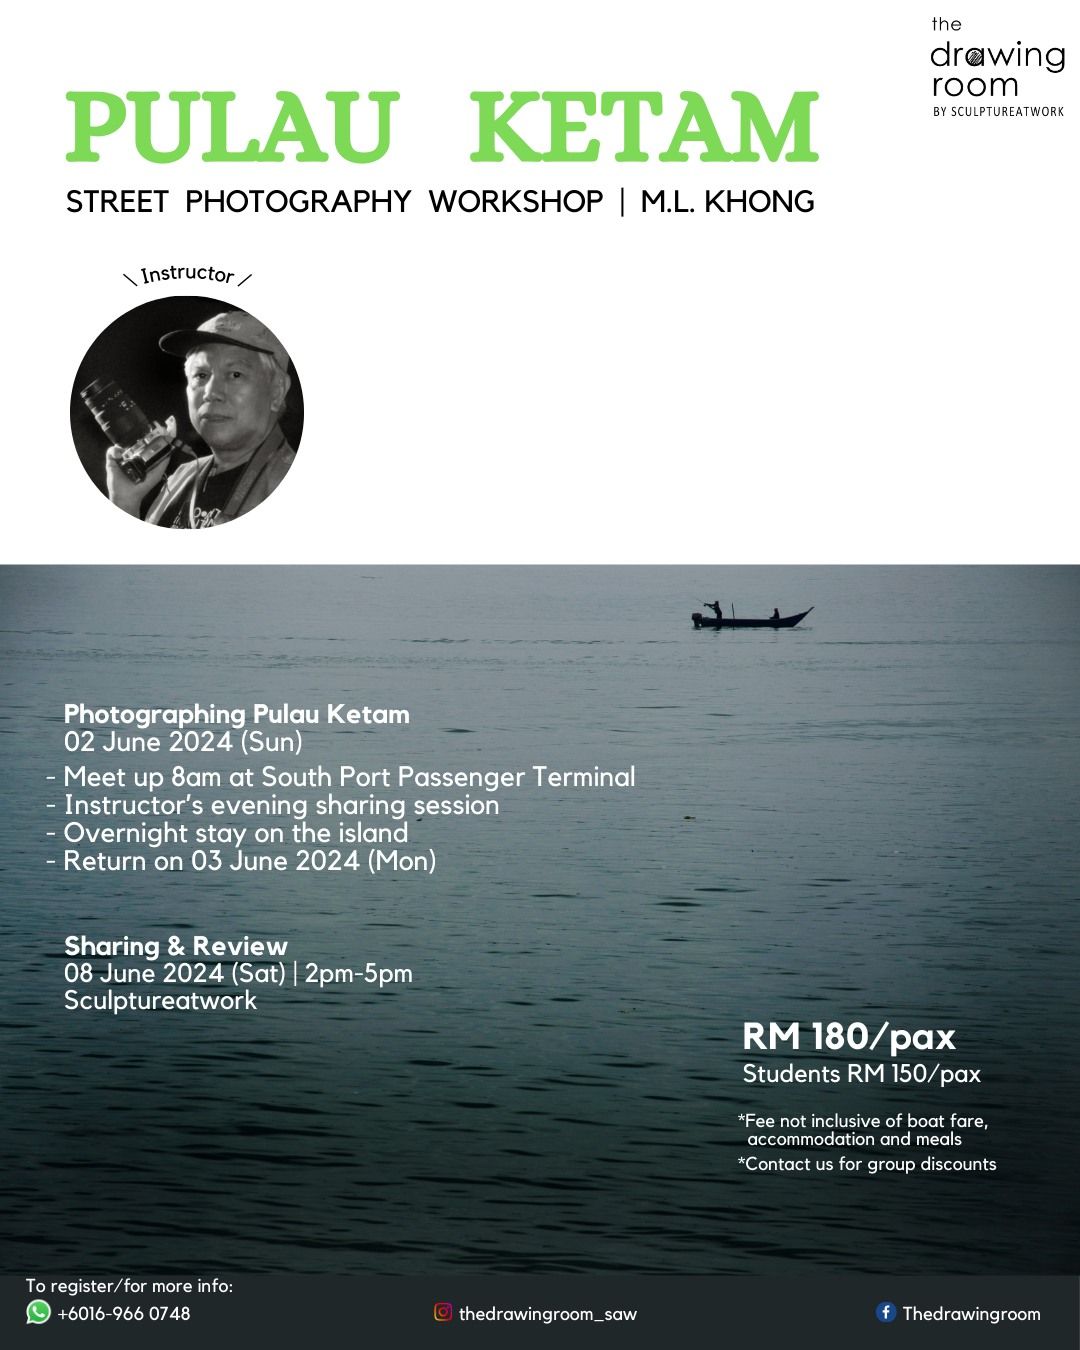 Pulau Ketam Street Photography Workshop